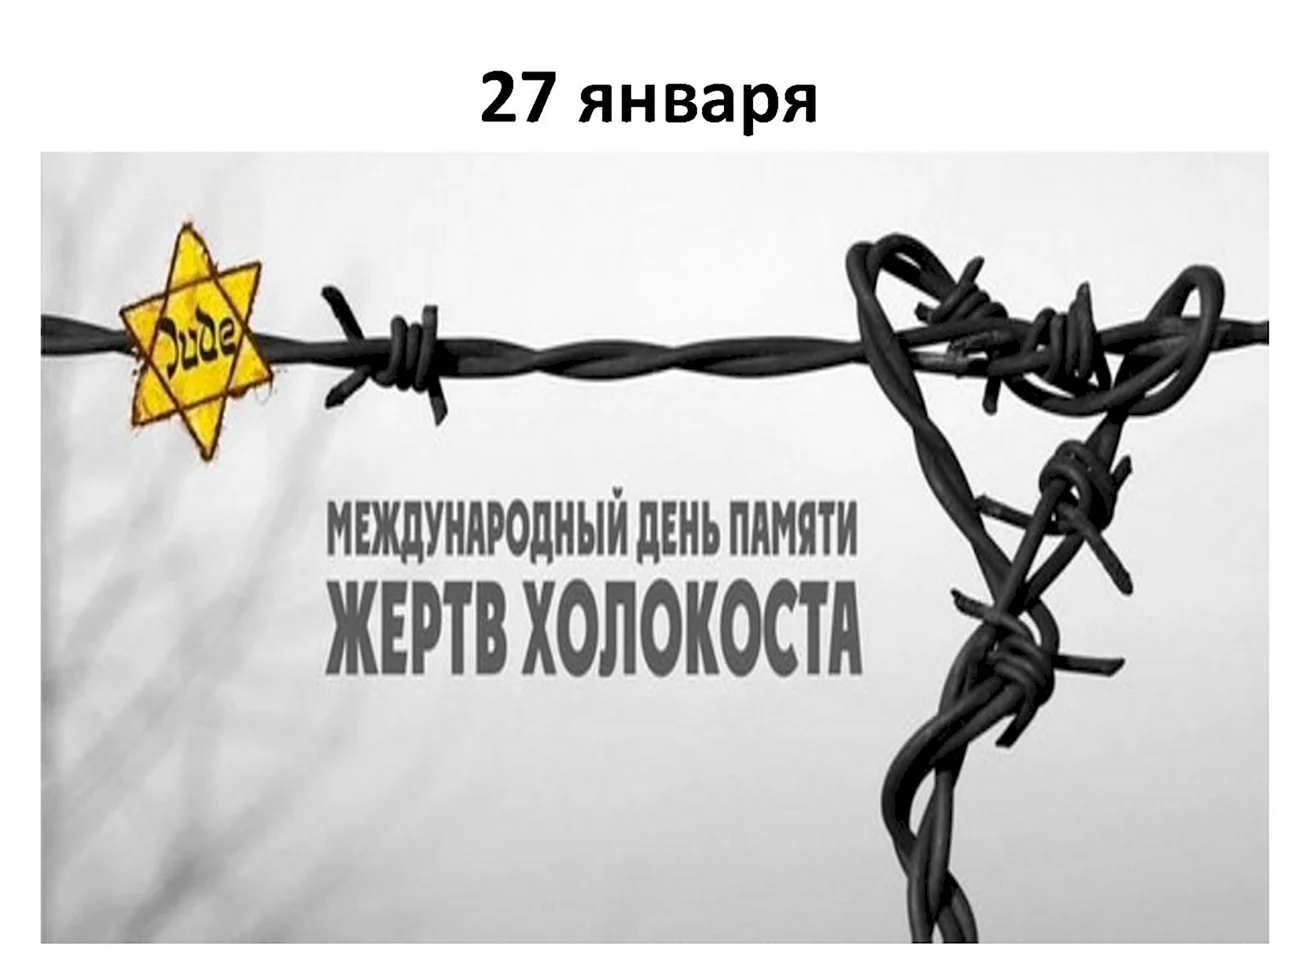 Холокост плакат. Поздравление